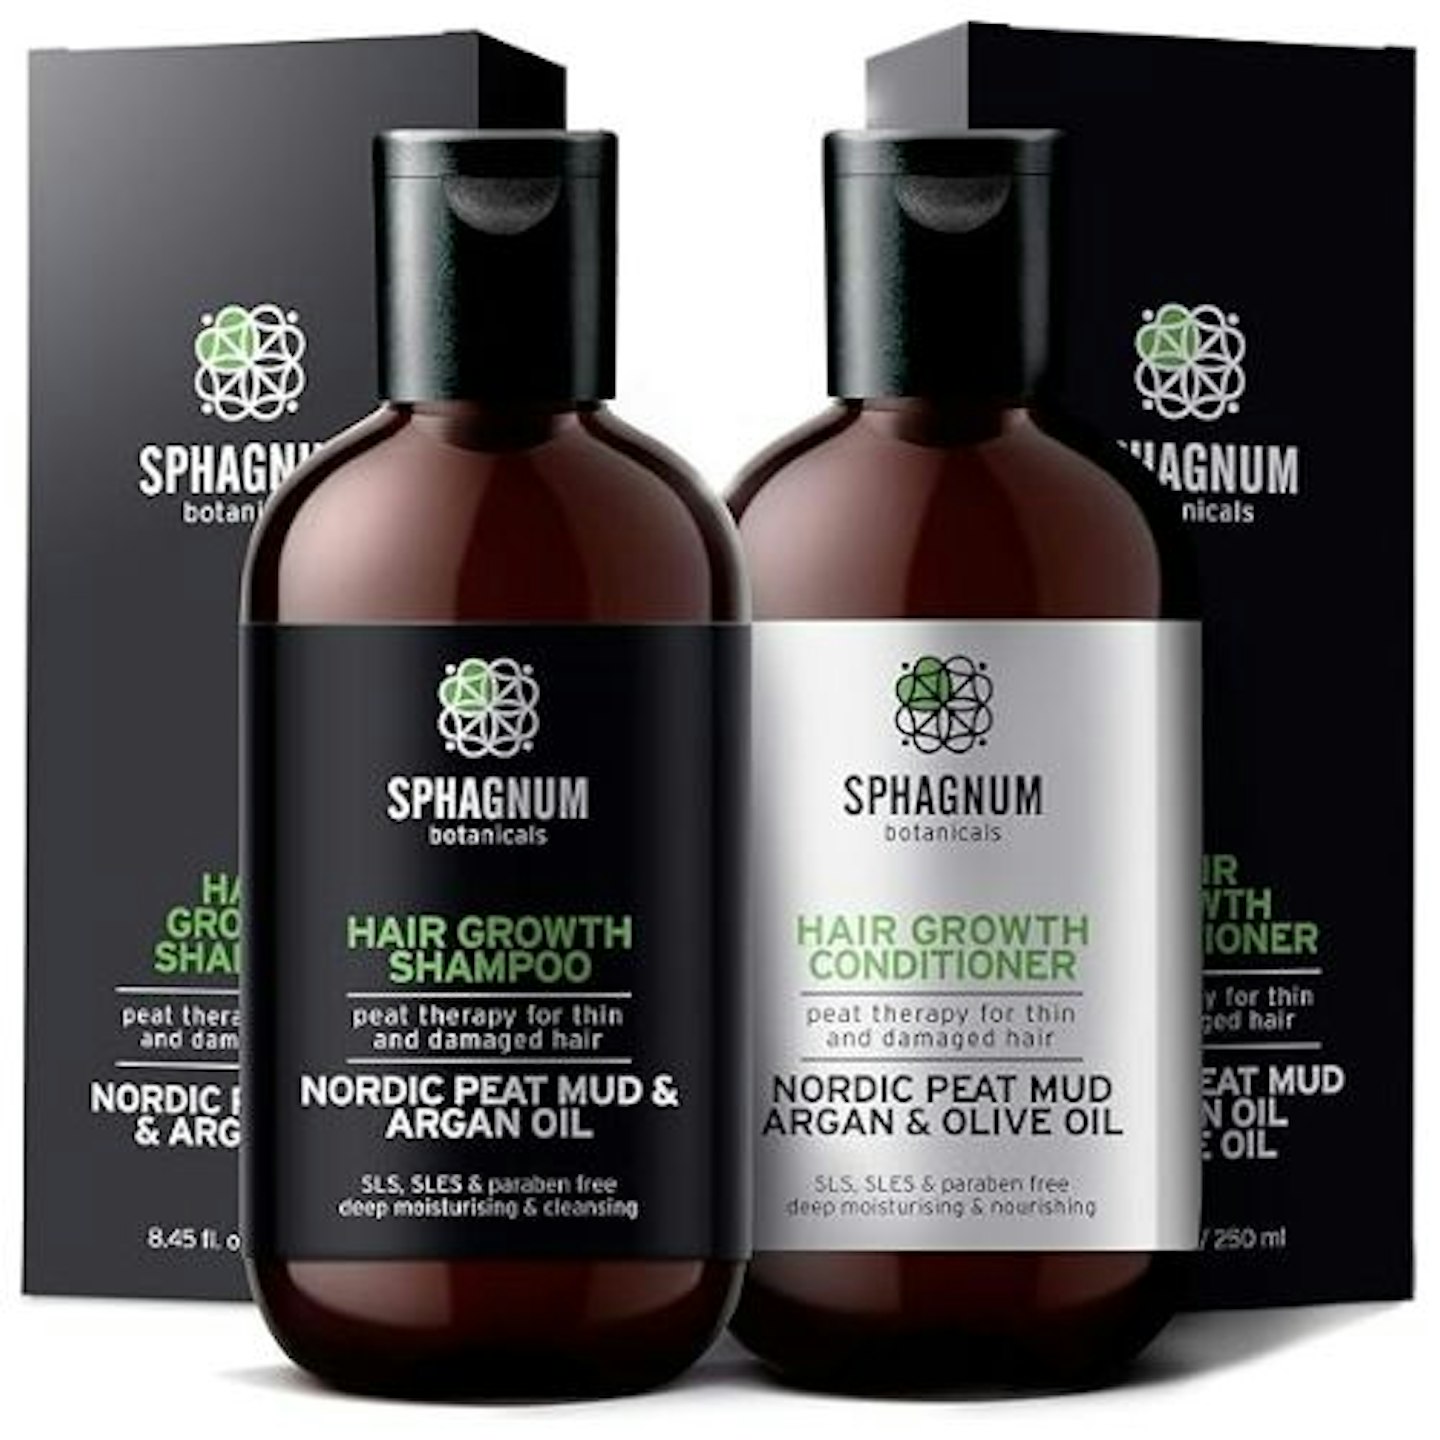 Sphagum Botanicals Hair Growth Shampoo and Conditioner